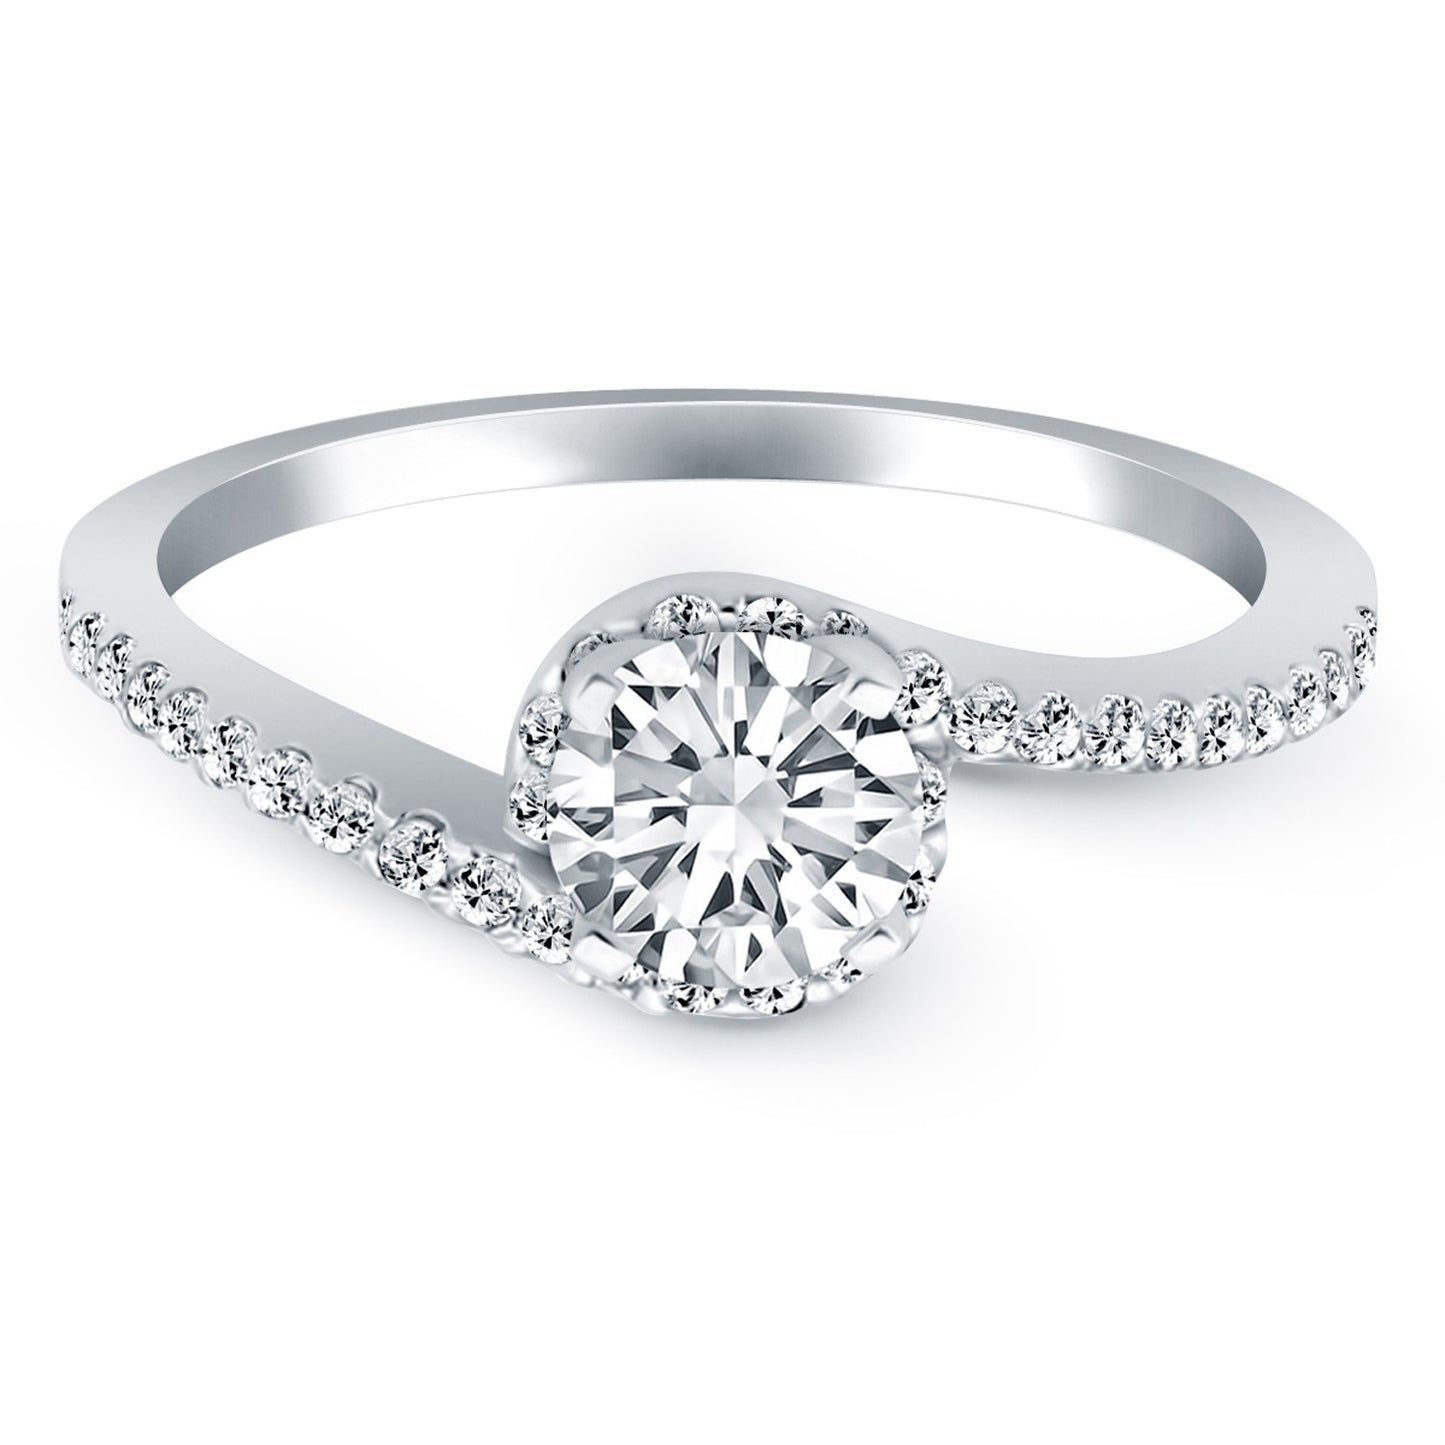 14k White Gold Bypass Swirl Diamond Halo Engagement Ring